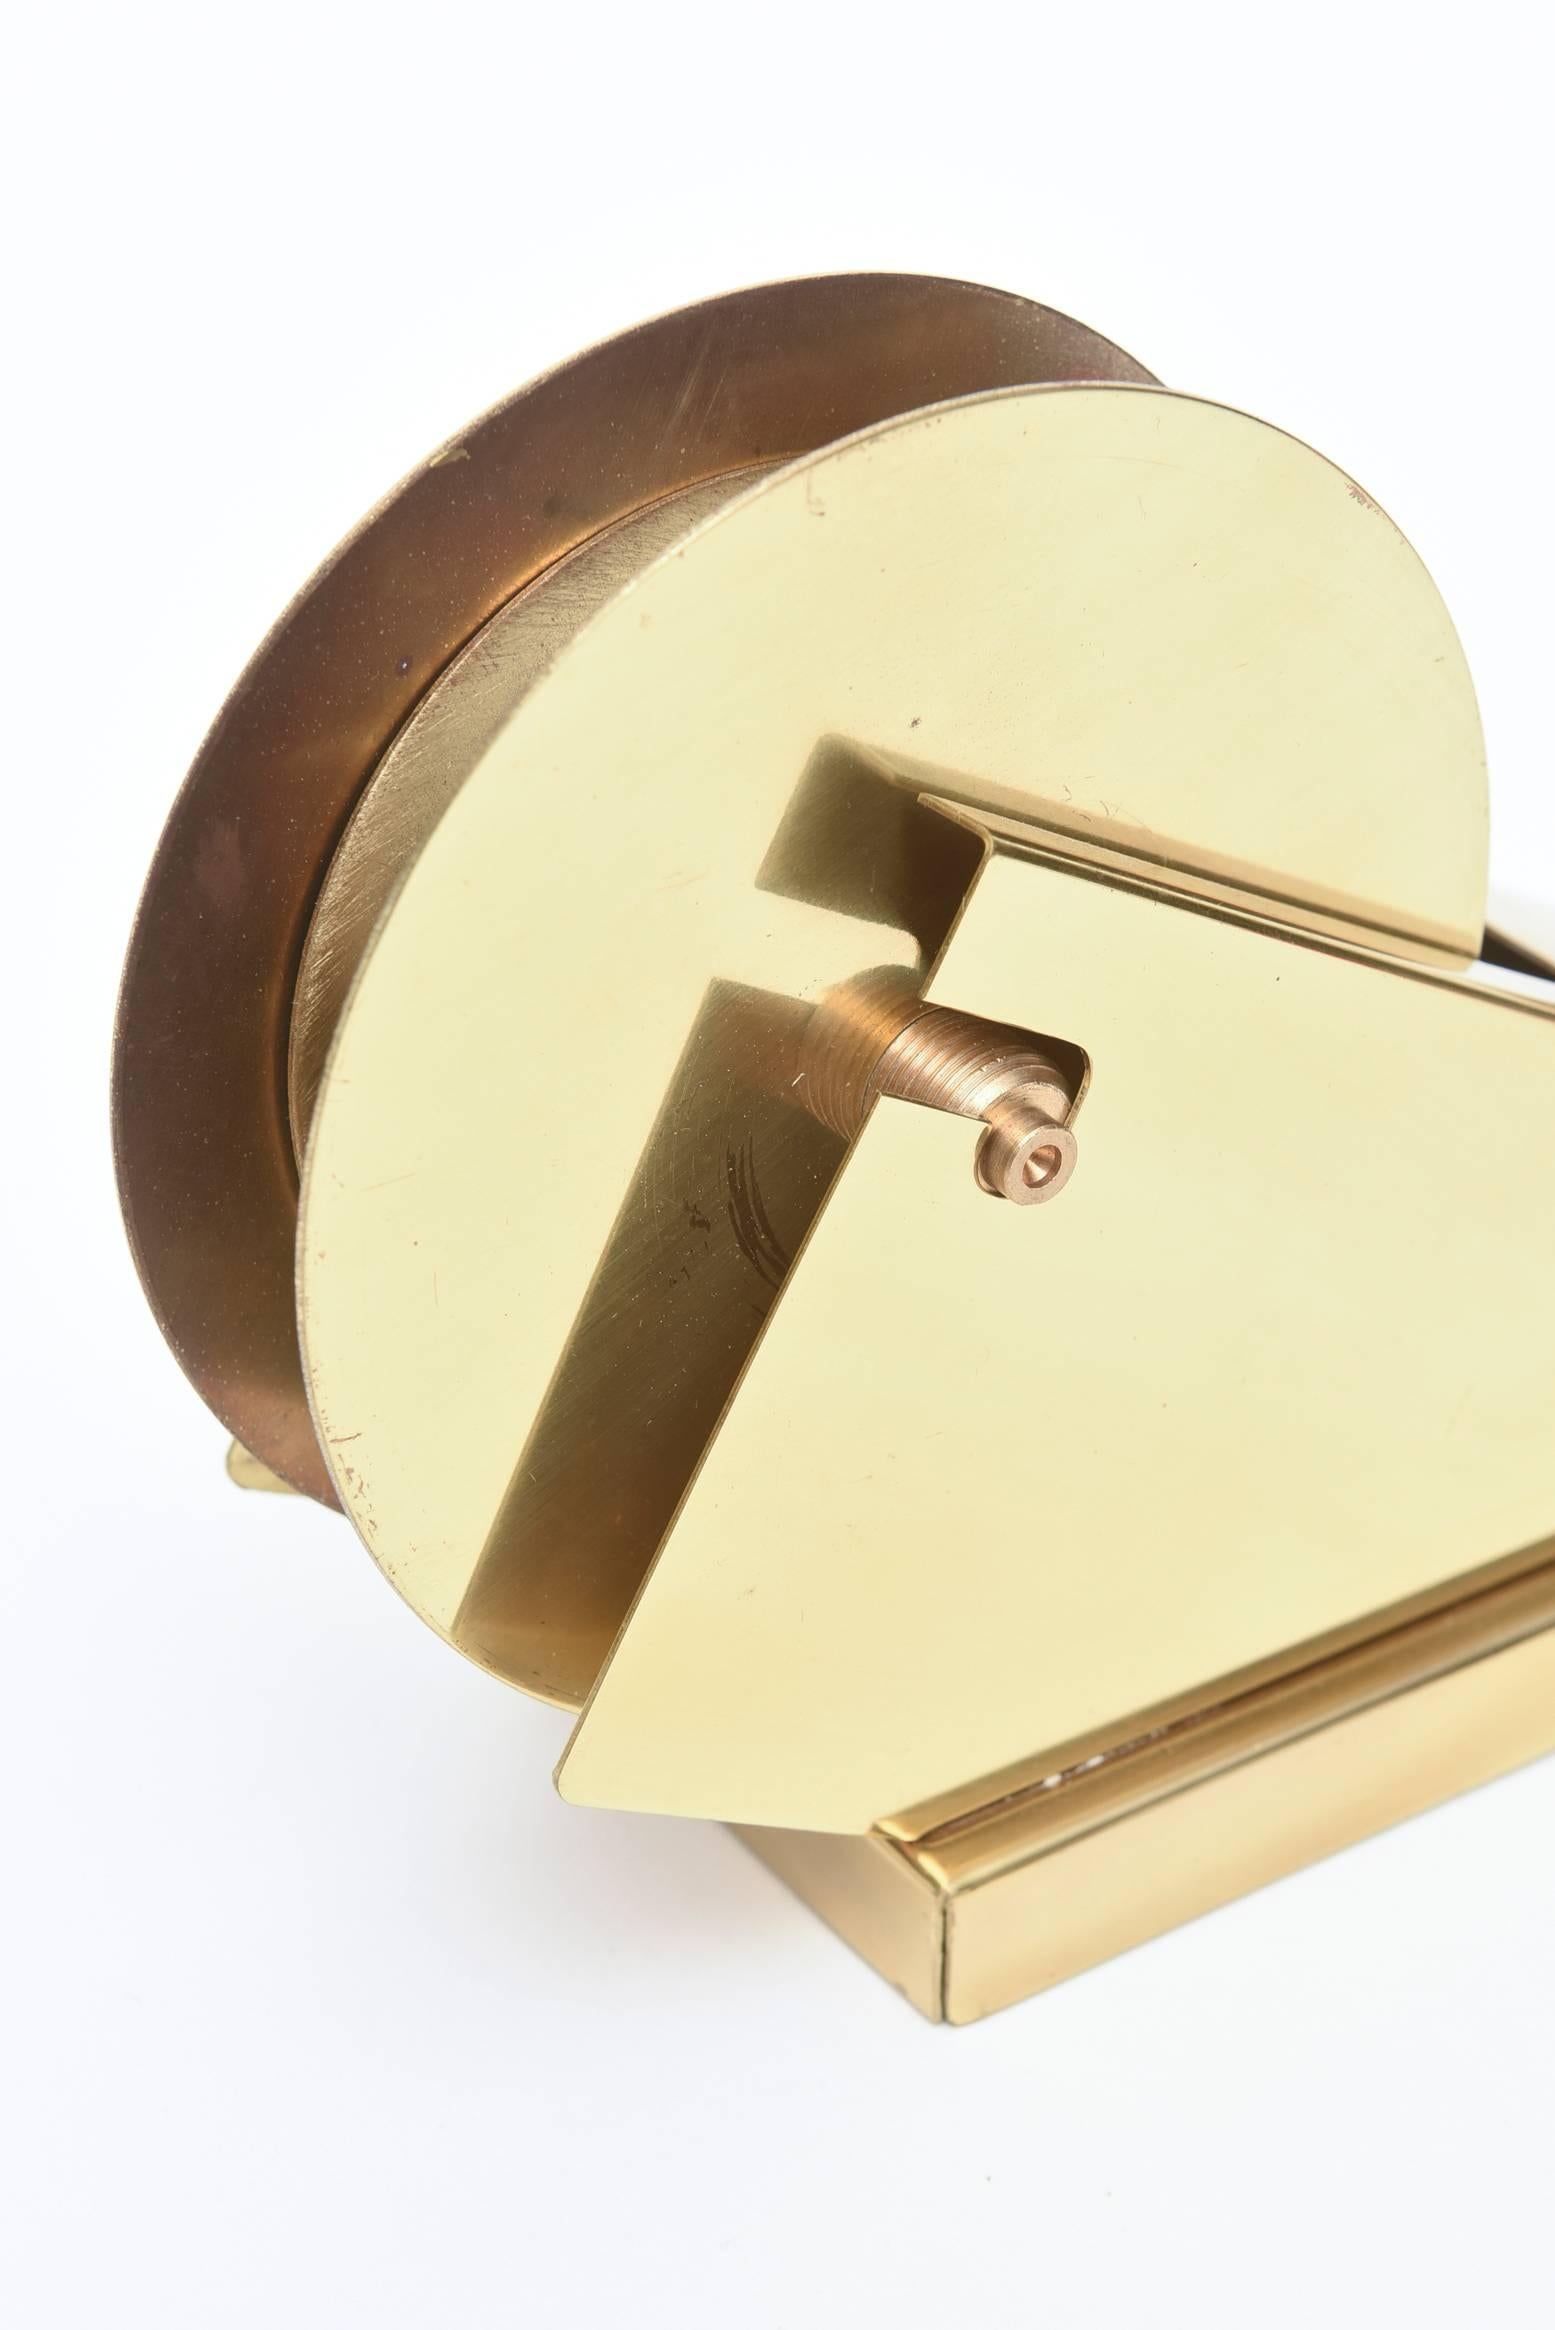 Late 20th Century Sculptural Brass Tape Dispenser or Tape Holder Modernist For Sale